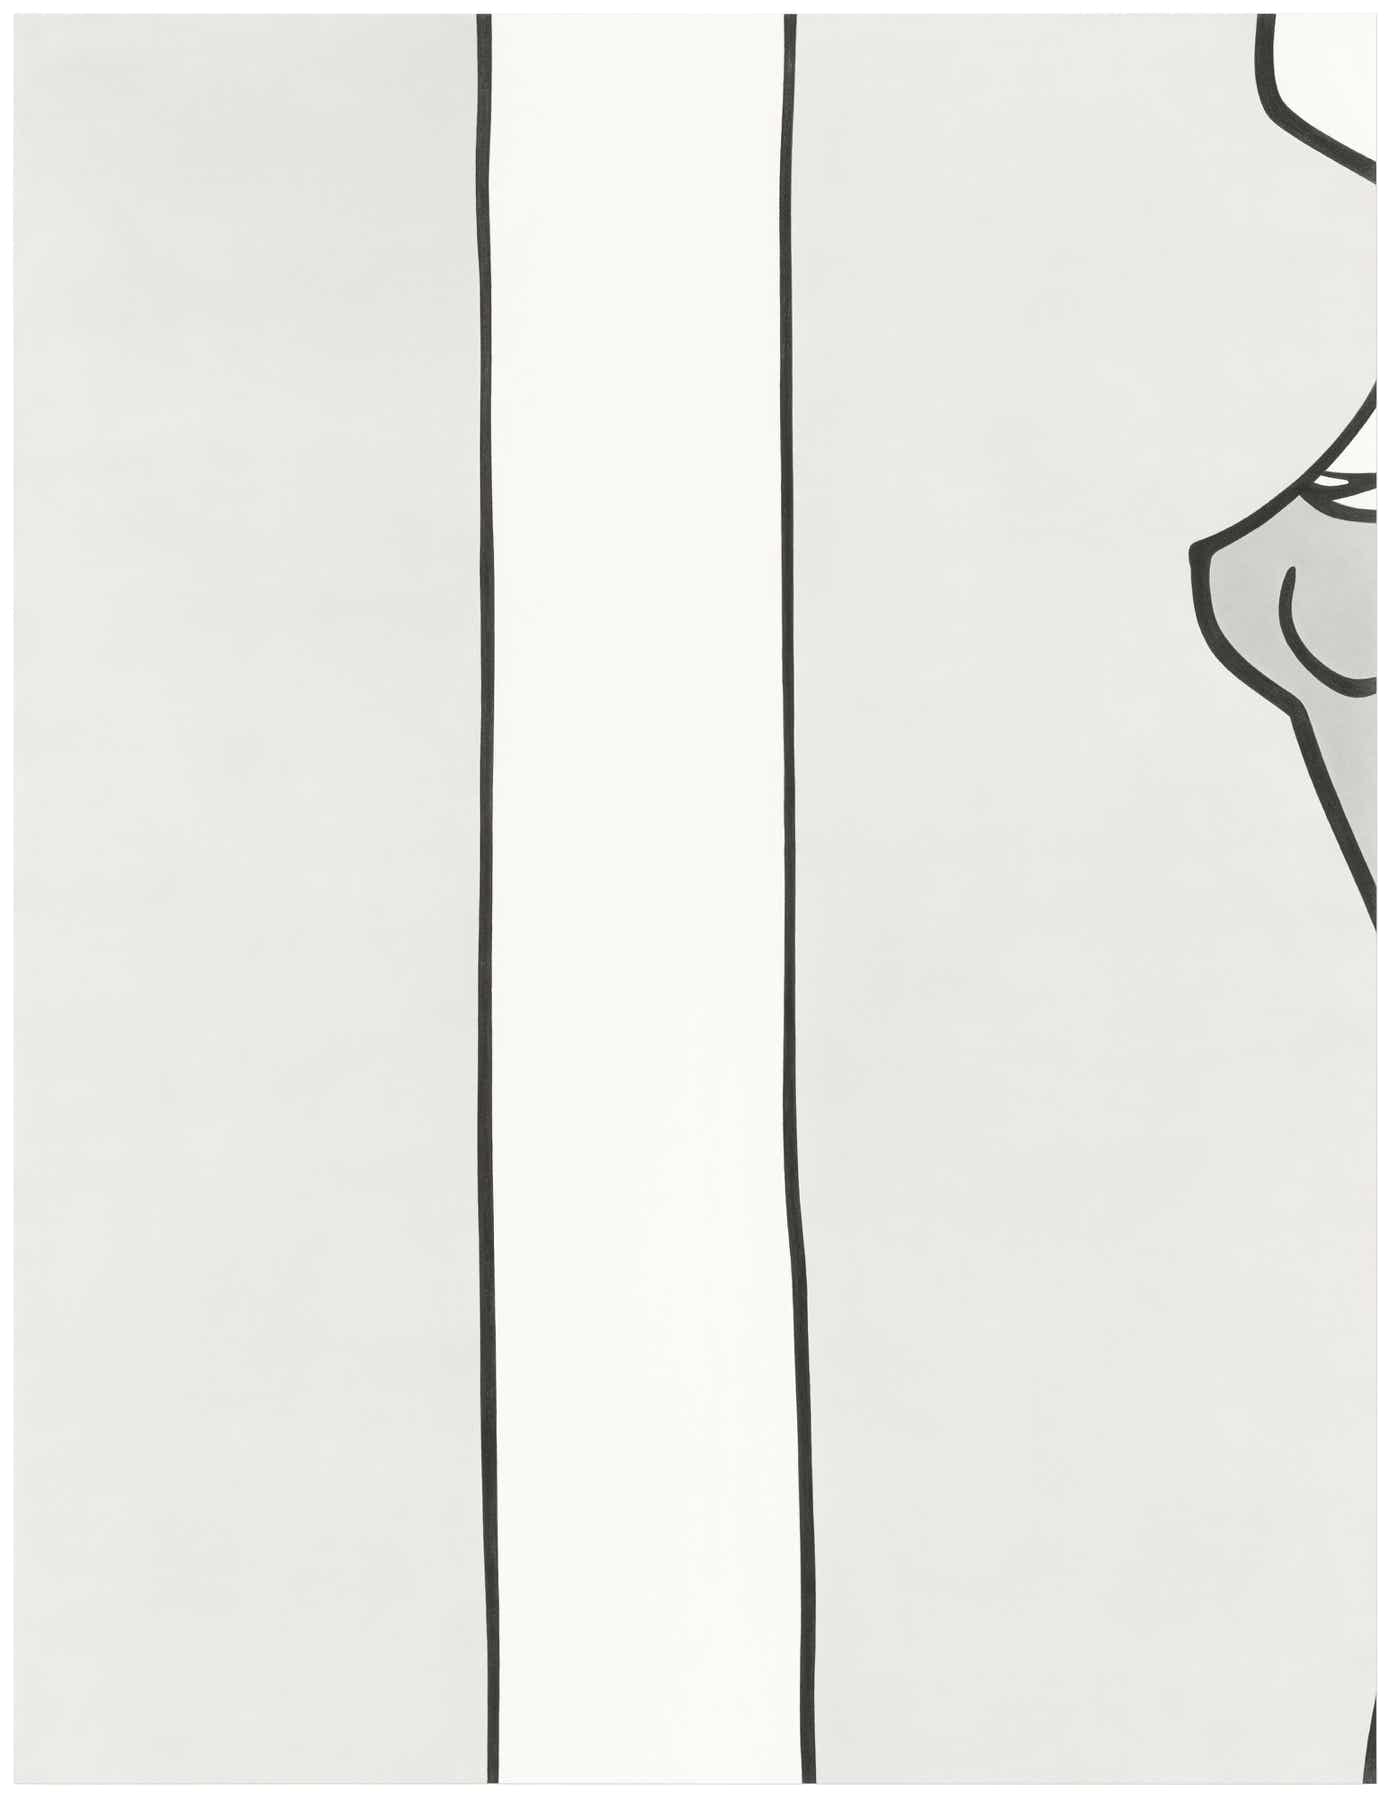 Pencil drawing of the series »Klandestine Geschichten« [Clandestine Stories] by Herbert Stattler.